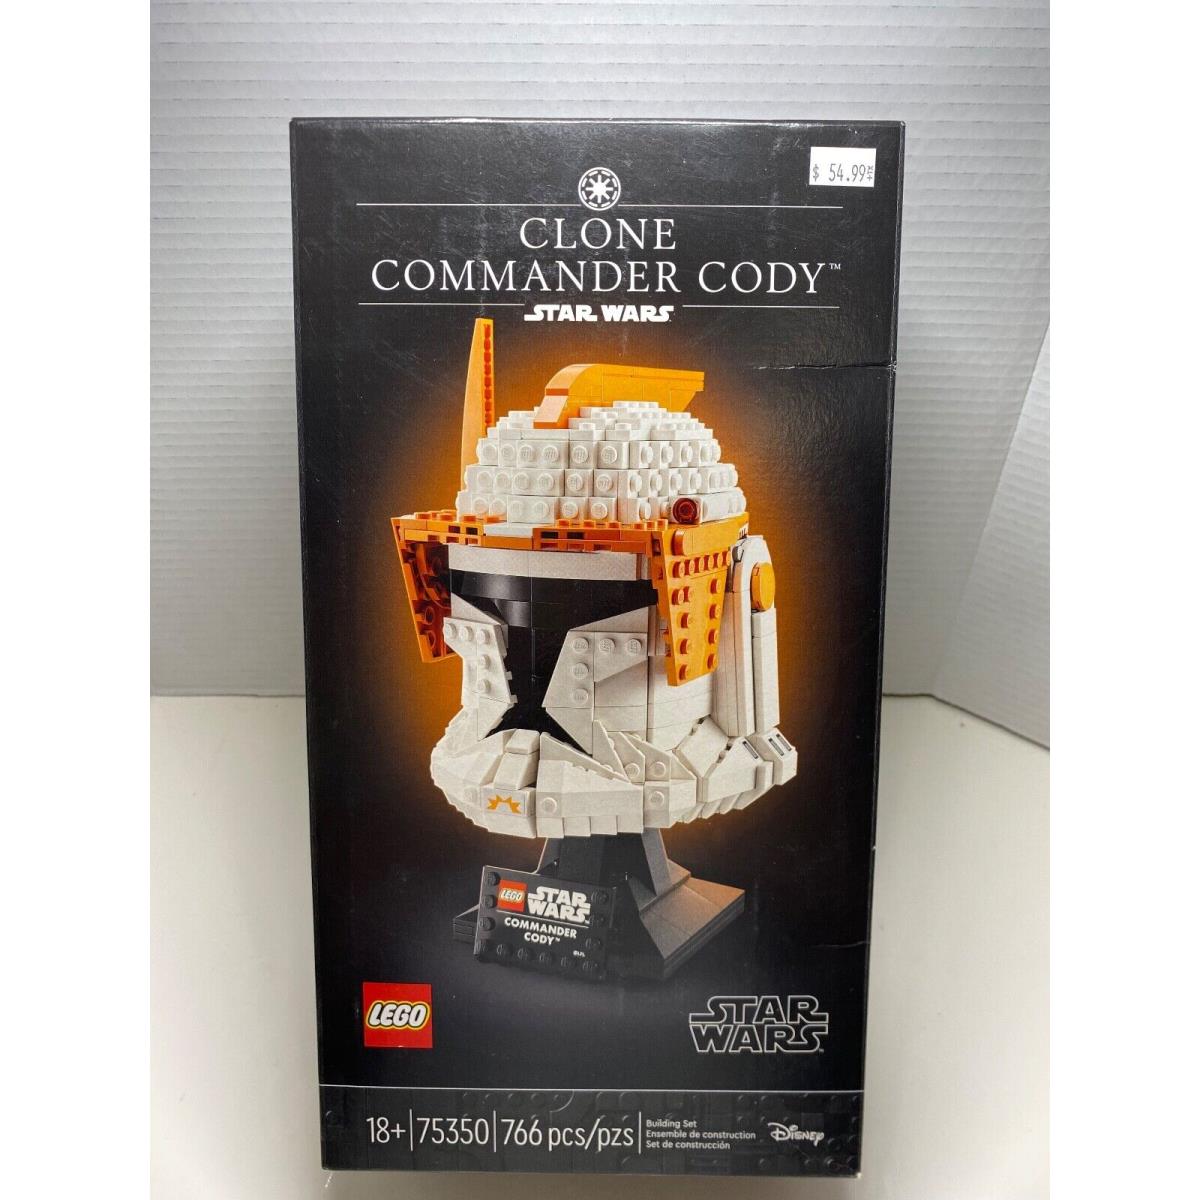 Lego Star Wars Commander Cody Set Complete